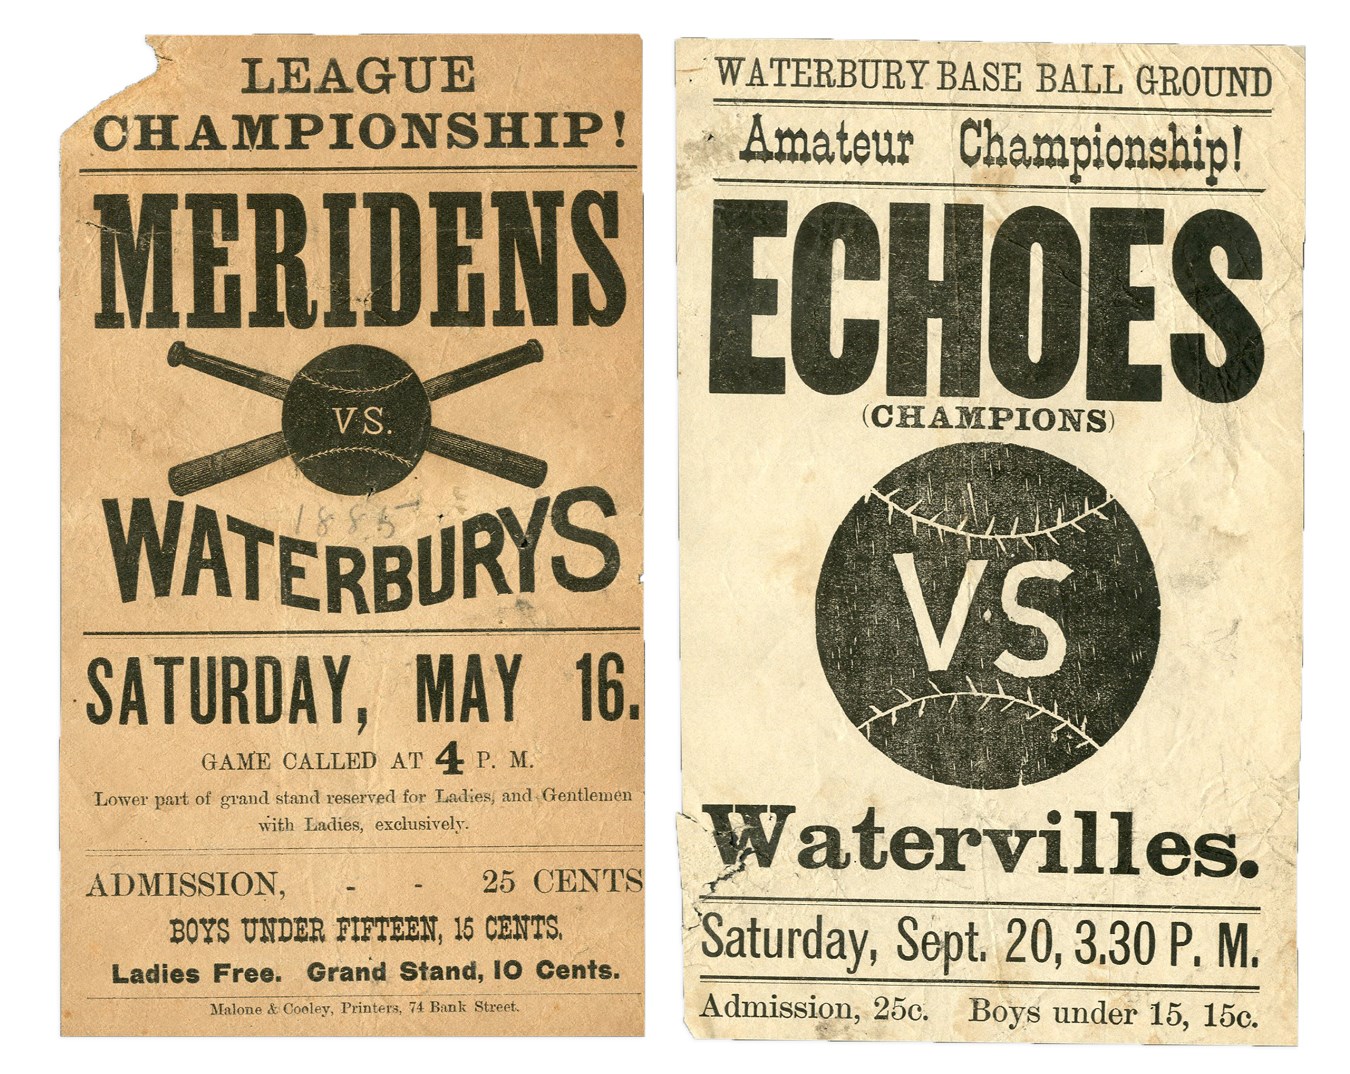 Early Baseball - 1880s Waterbury Connecticut Base Ball Grounds Broadsides (8)